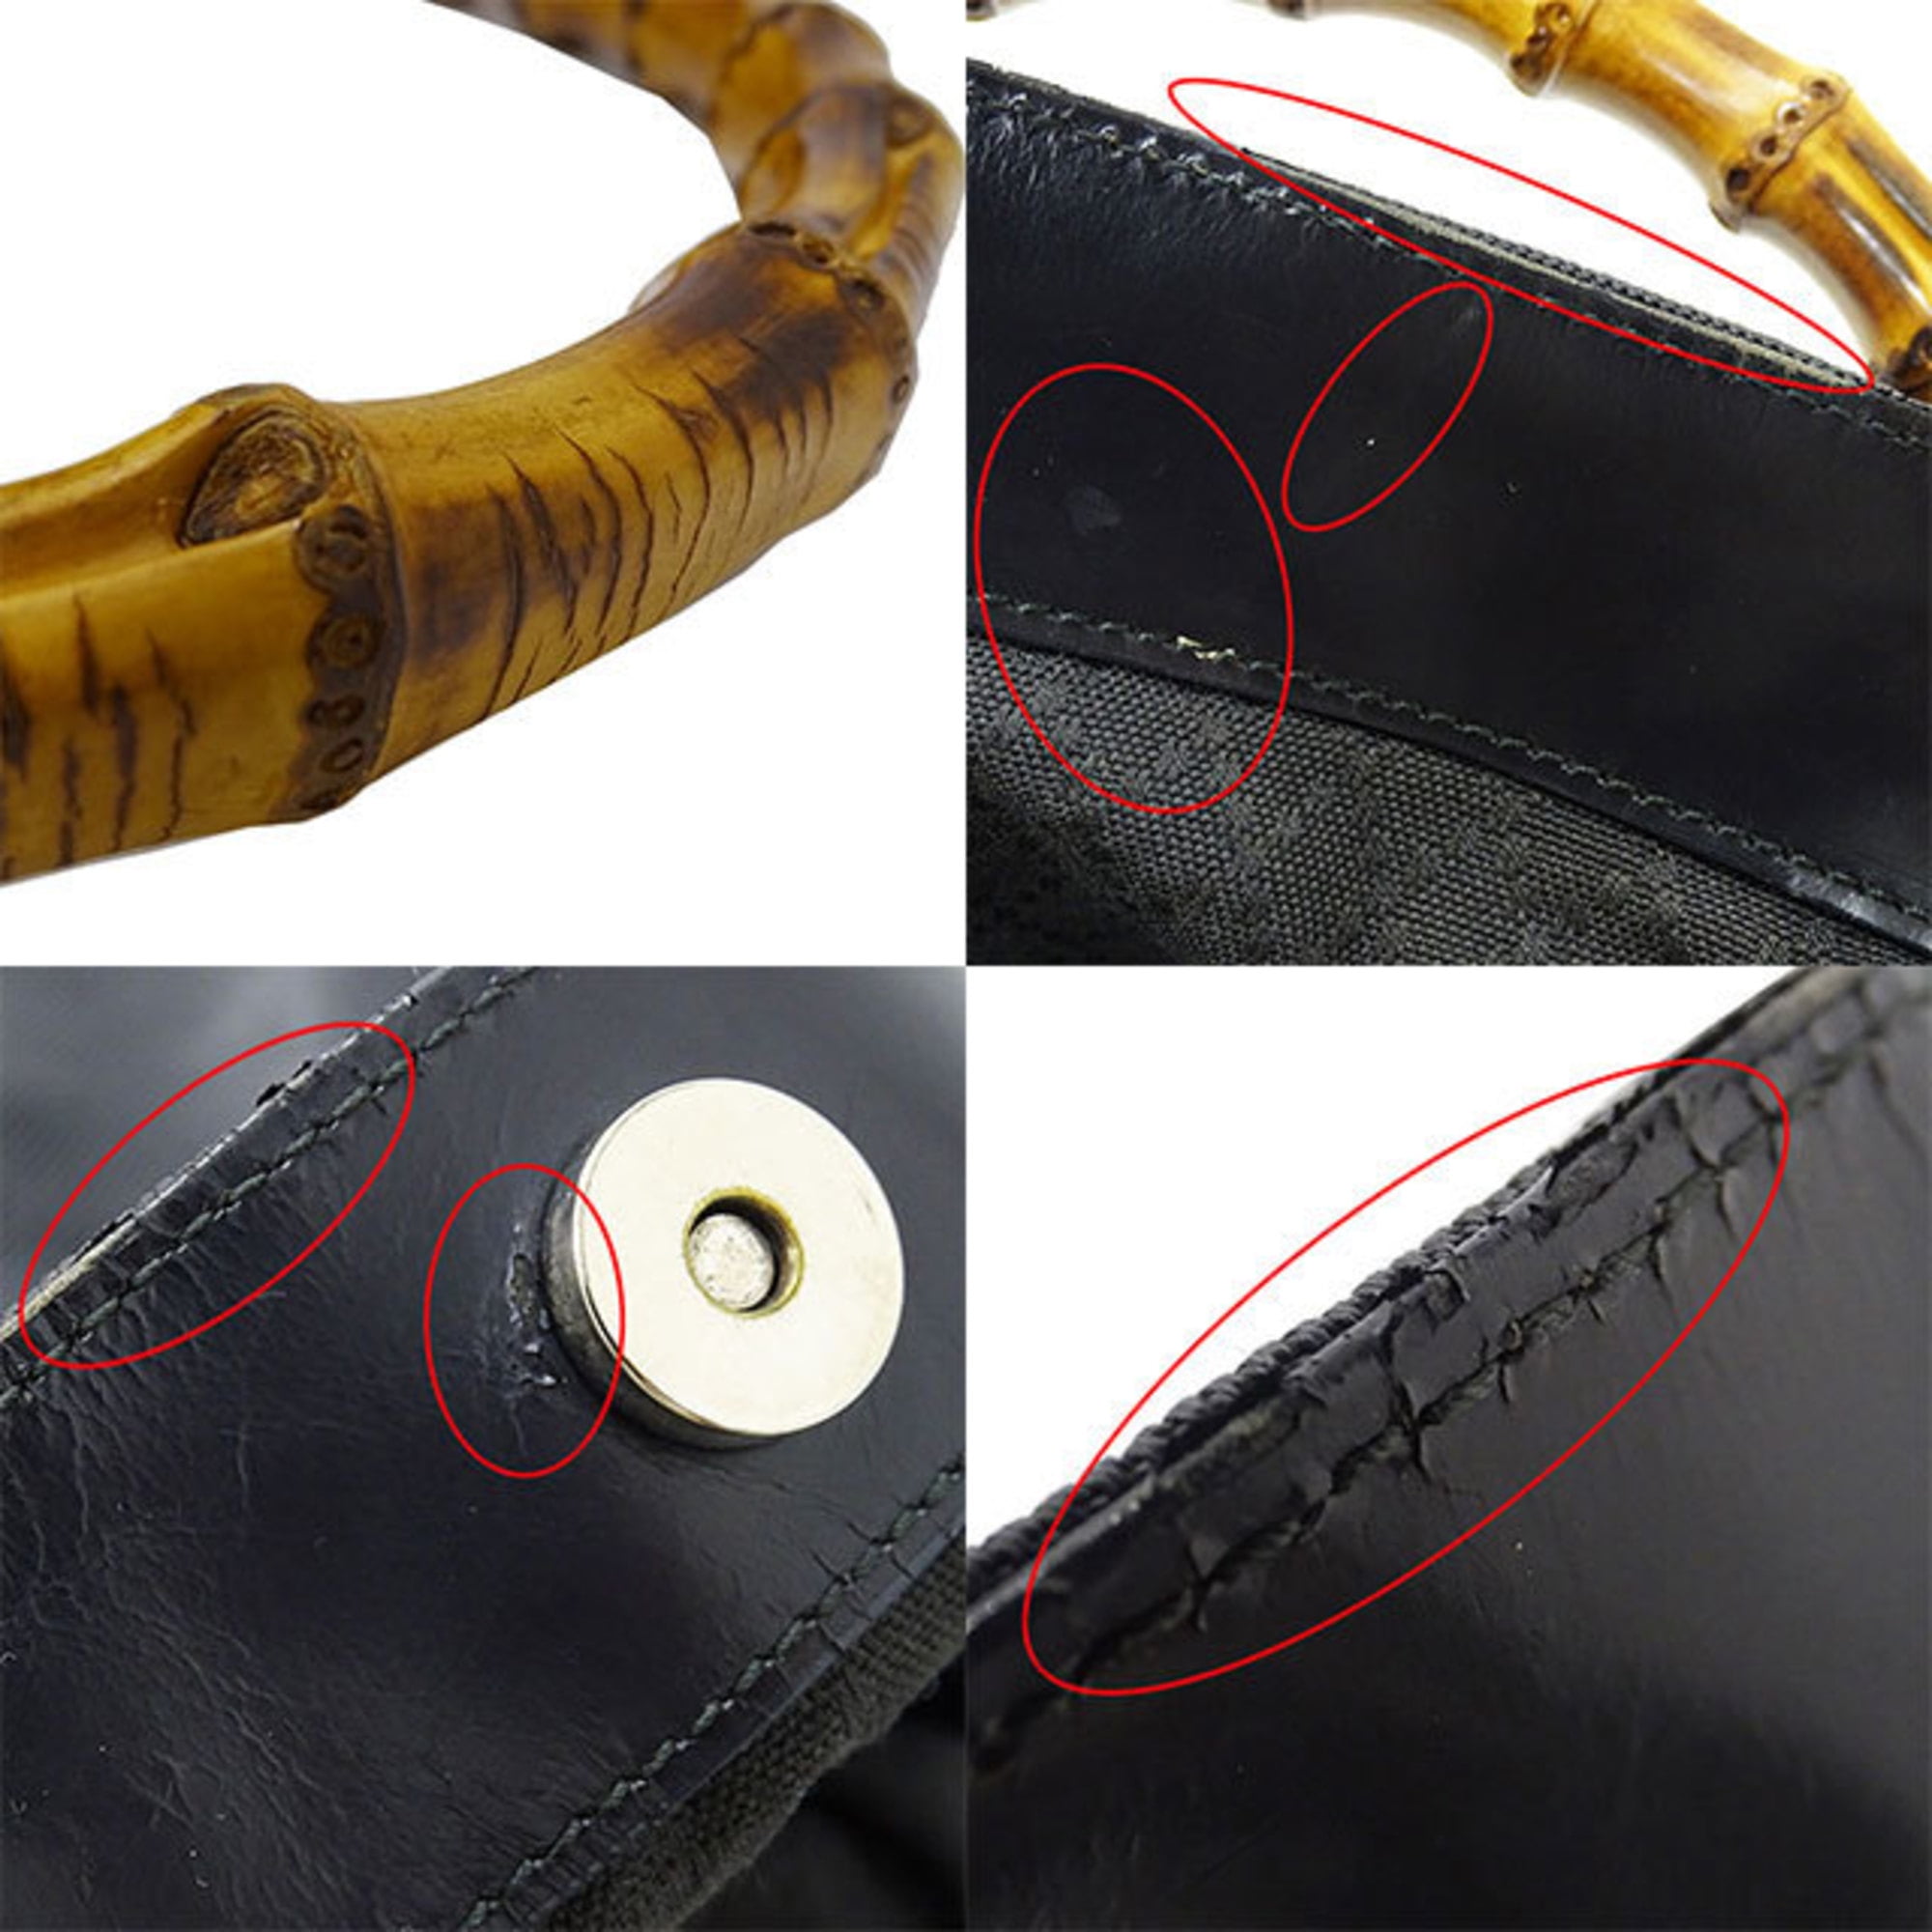 Authenticated Used Gucci bamboo handbag shoulder bag 2way 189867